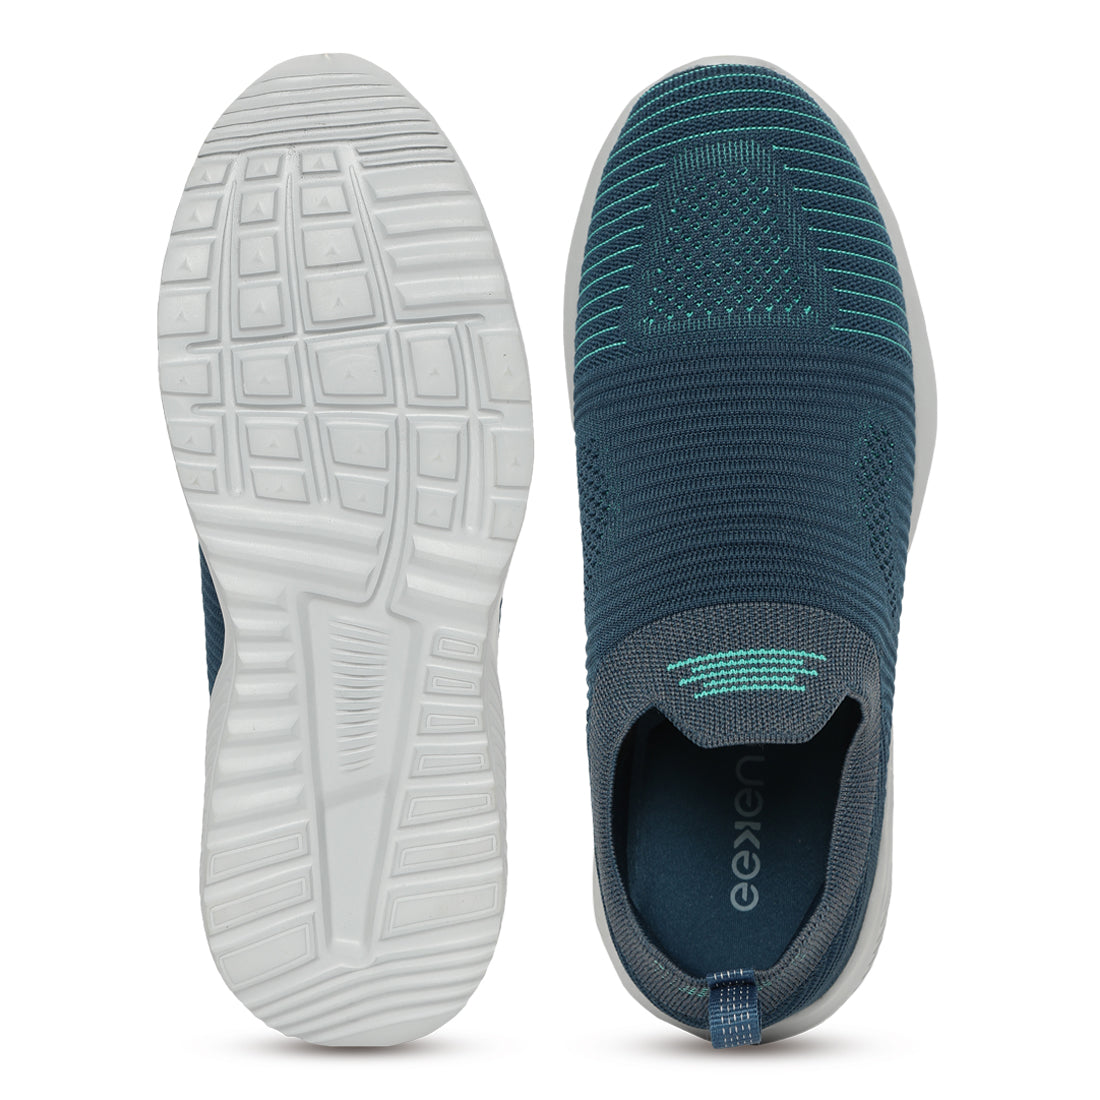 Eeken Teal Blue - Sea Green Athleisure Shoes for Men